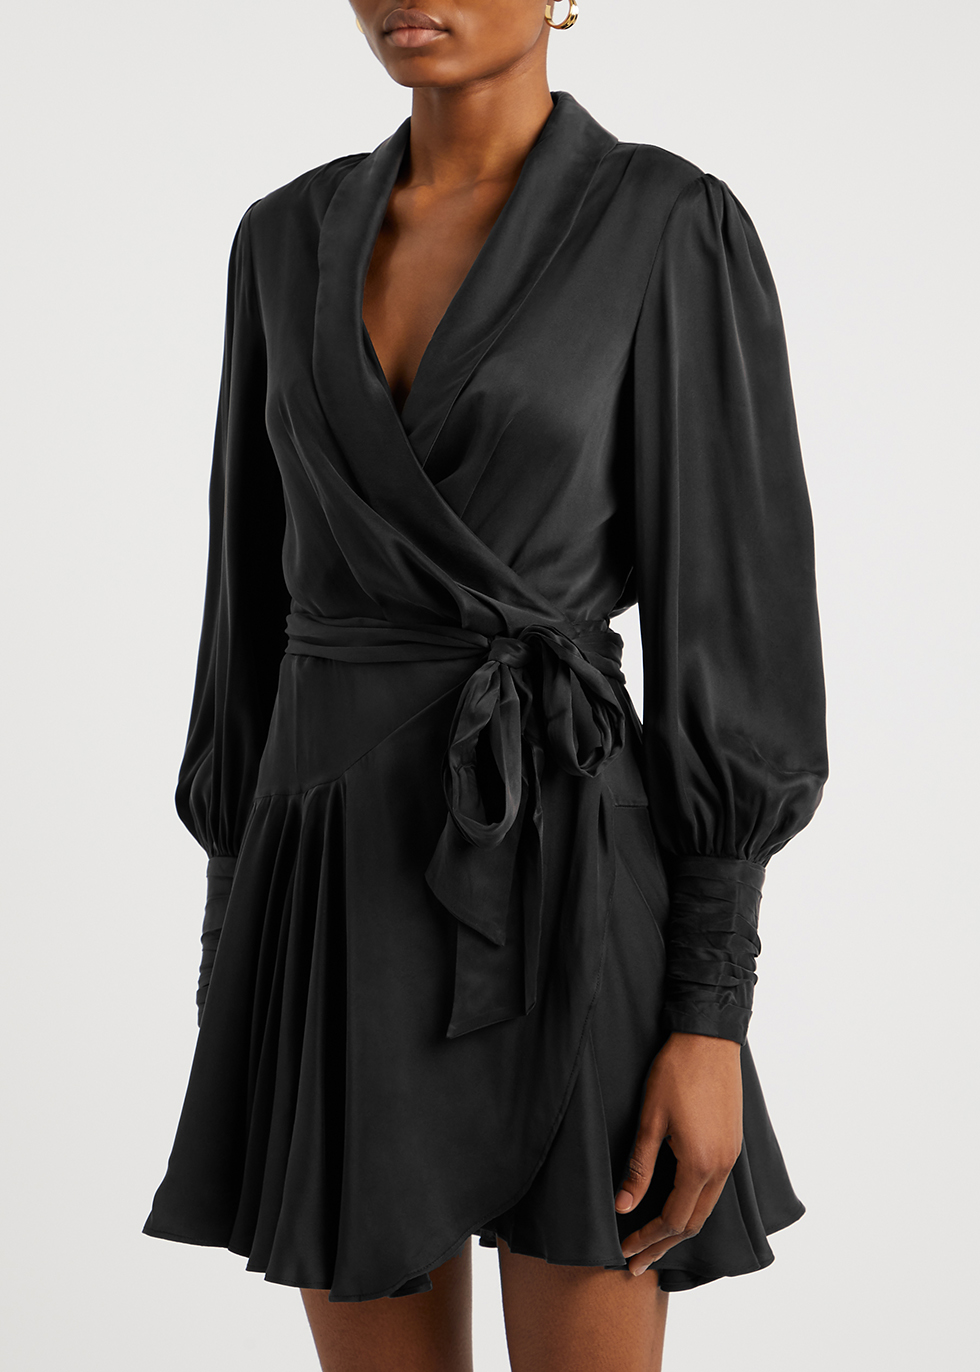 Zimmermann Black silk wrap dress - Harvey Nichols